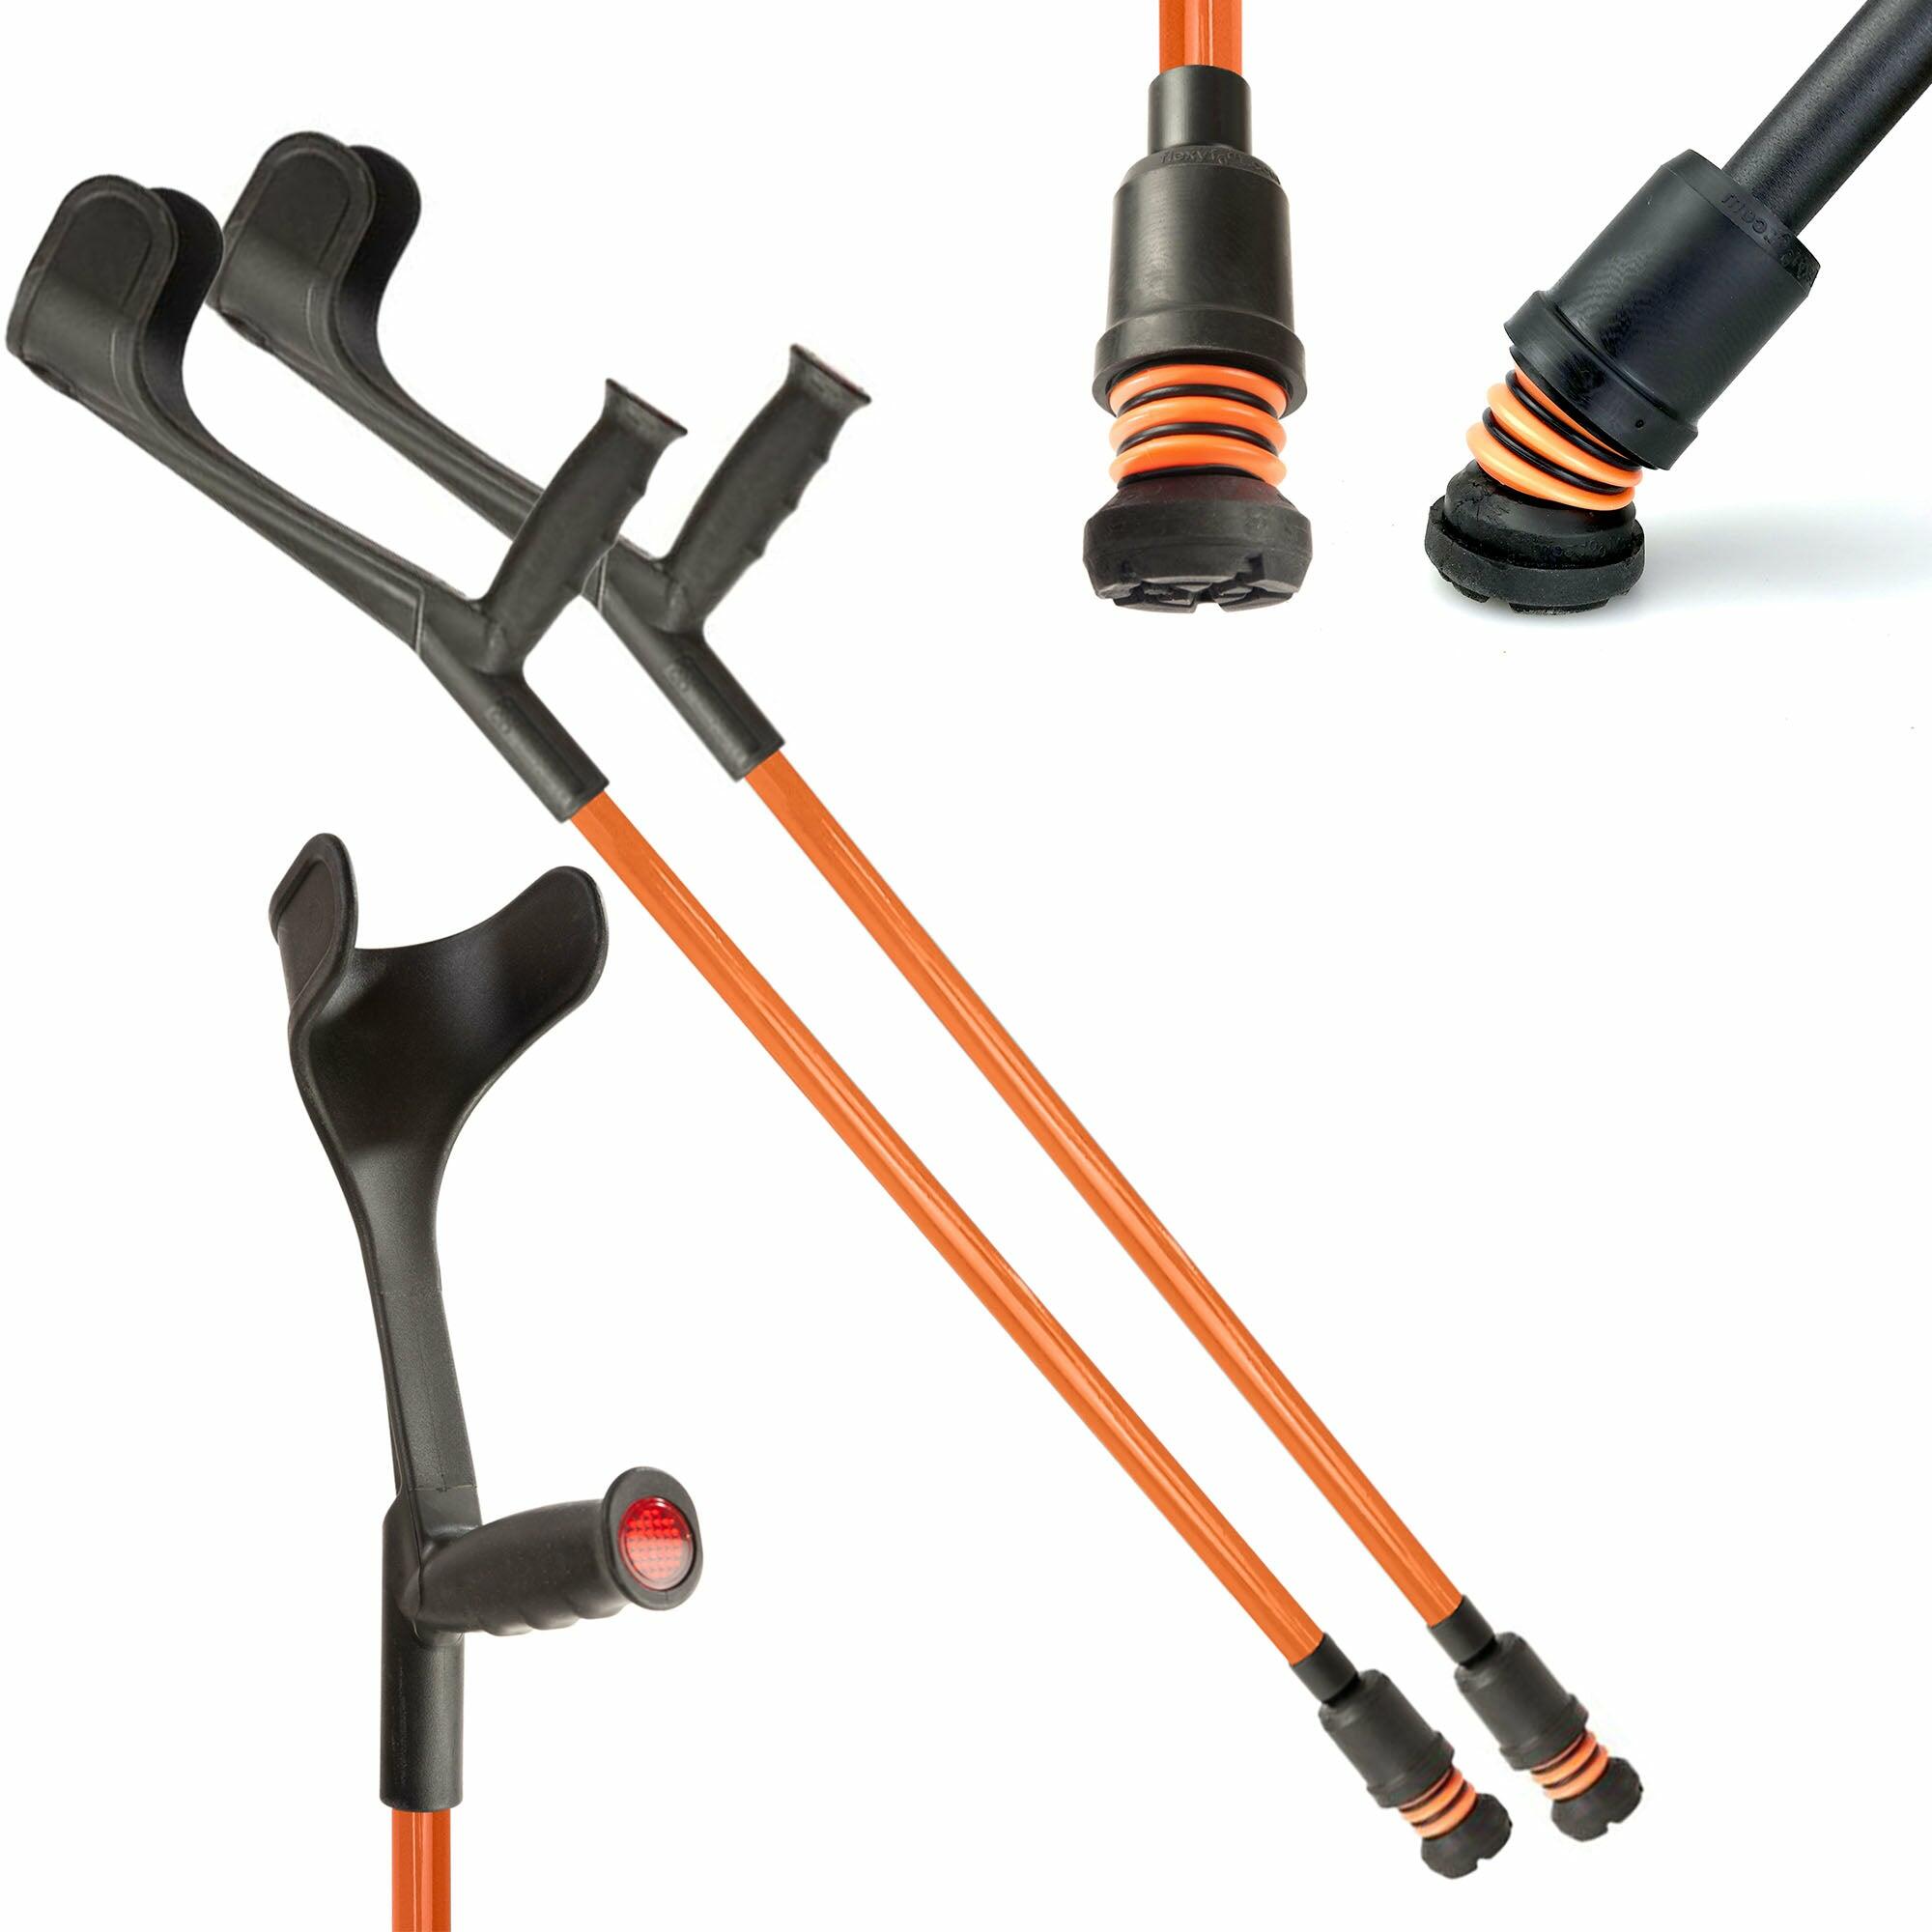 A pair of orange Flexyfoot Soft Grip Open Cuff Crutches